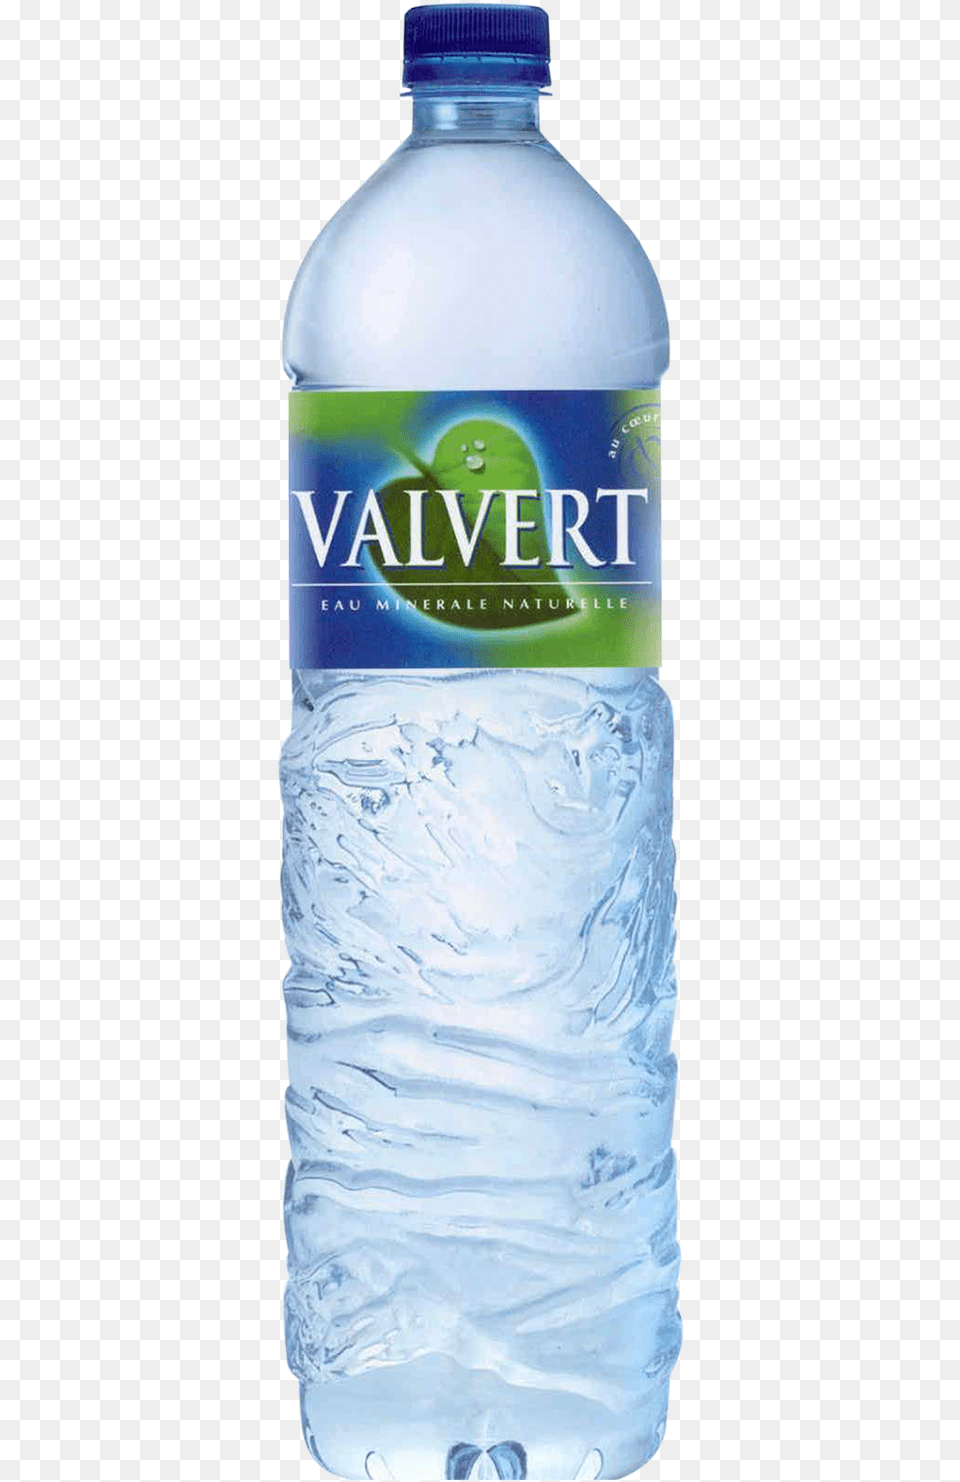 The Skemarketeers Bouteille Valvert, Beverage, Bottle, Mineral Water, Water Bottle Png